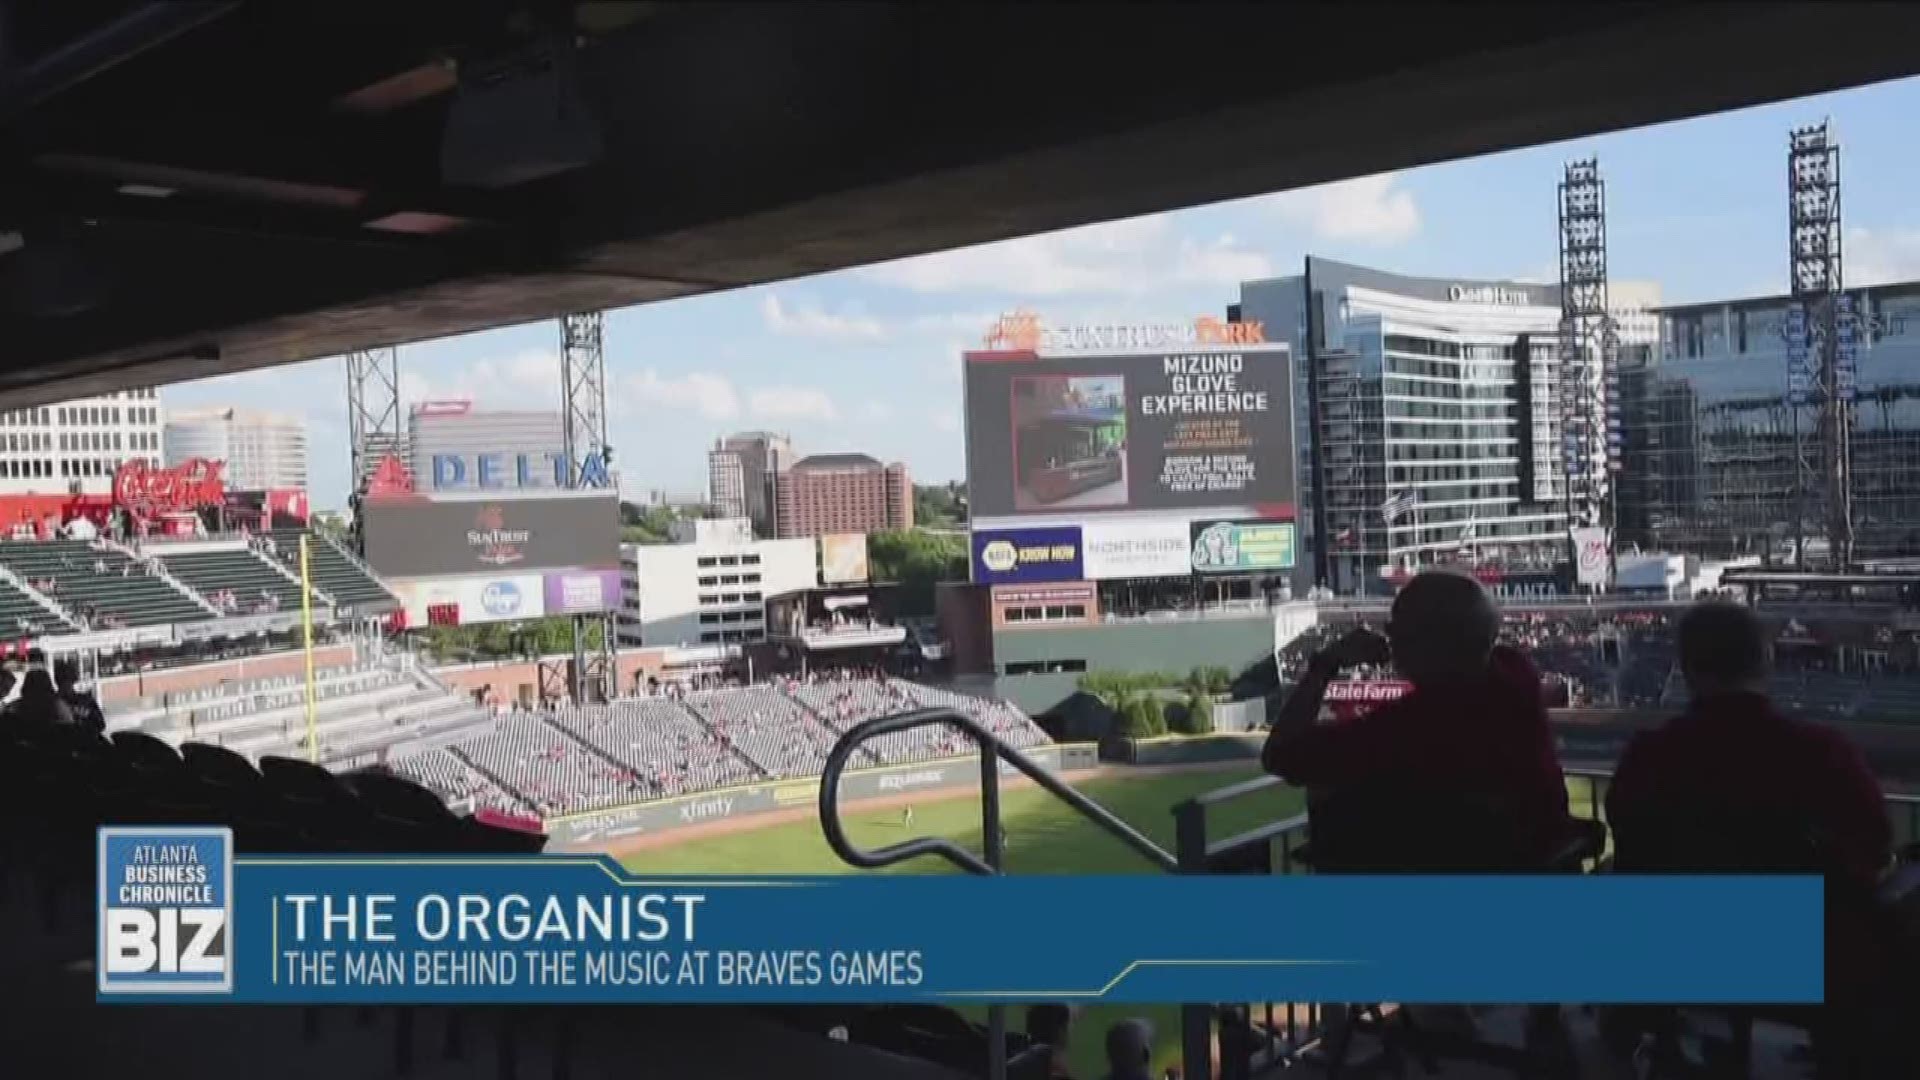 Meet organist Matthew Kaminski, the man behind the Atlanta Braves music... on 'Atlanta Business Chronicle's BIZ'